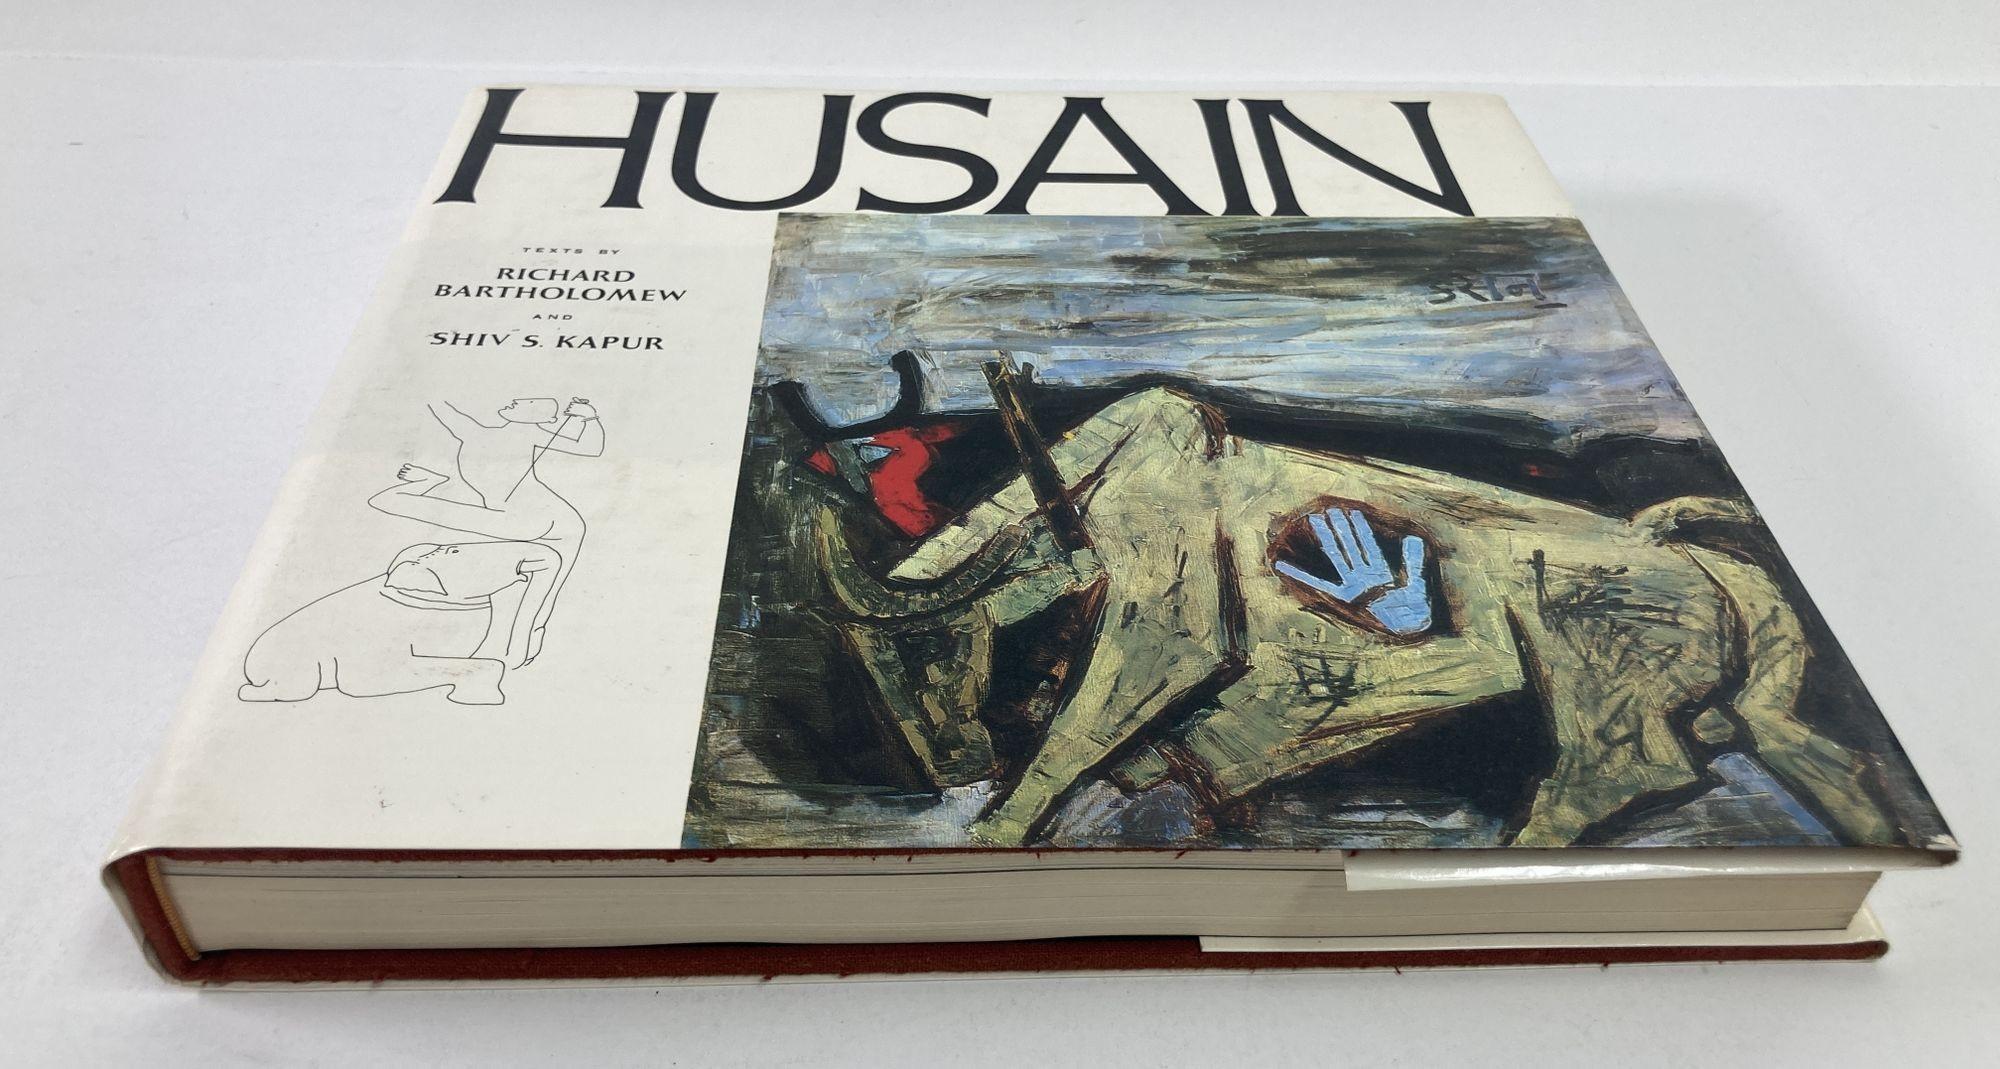 Expressionist Husain by Maqbul Fida Husain, Richard Bartholomew, Shiv S. Kapur, H. N. Abrams For Sale